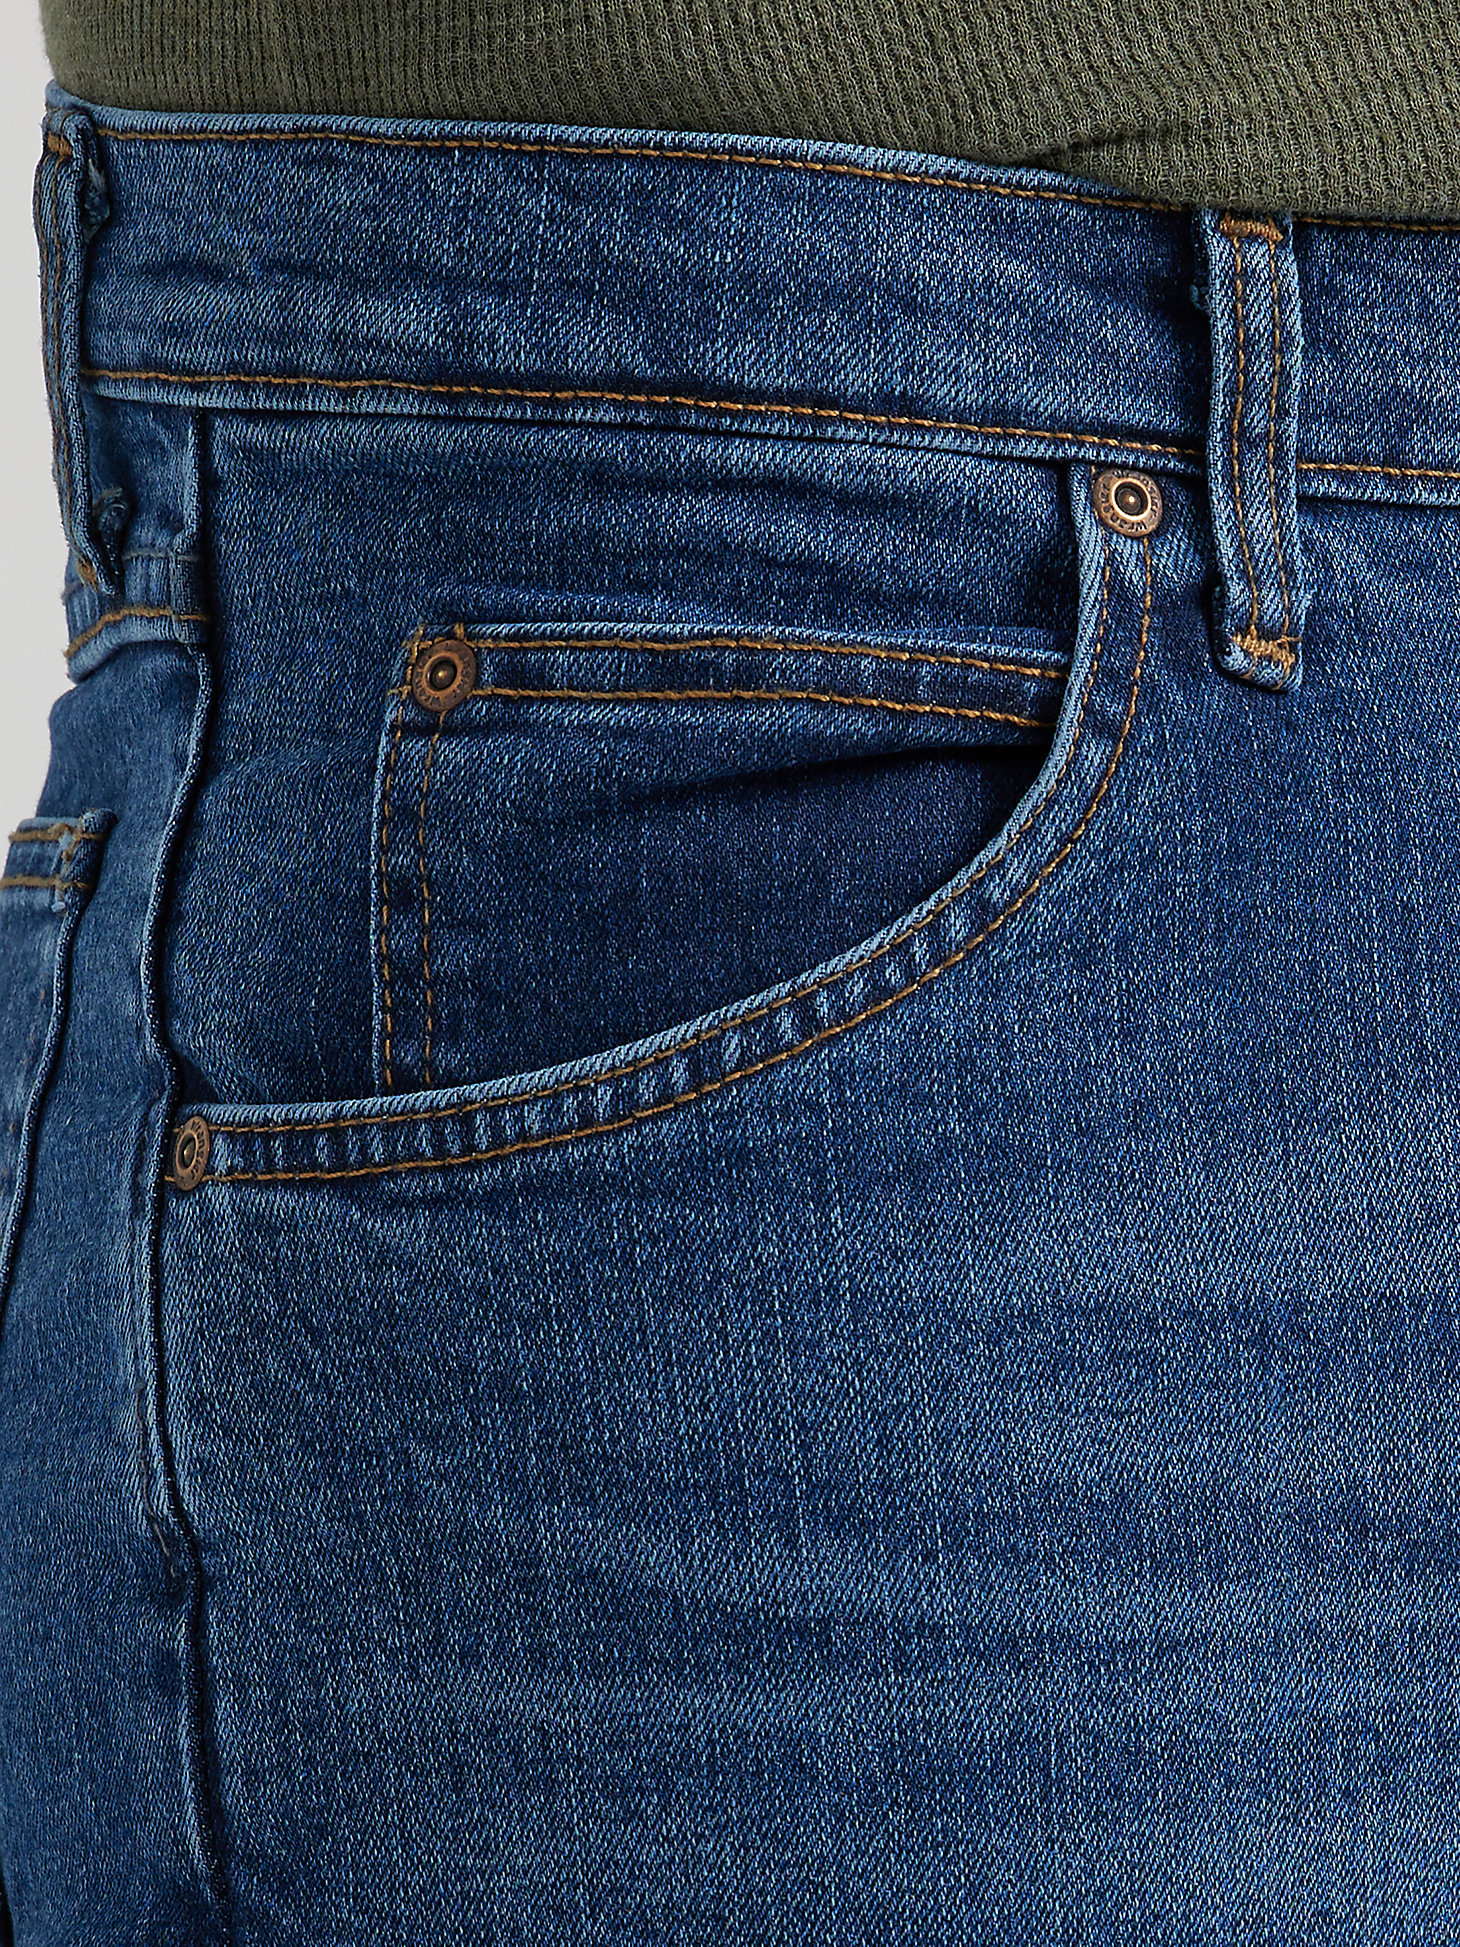 Wrangler® Five Star Premium Denim Flex For Comfort Regular Fit Jean in Dark Stonewash alternative view 4